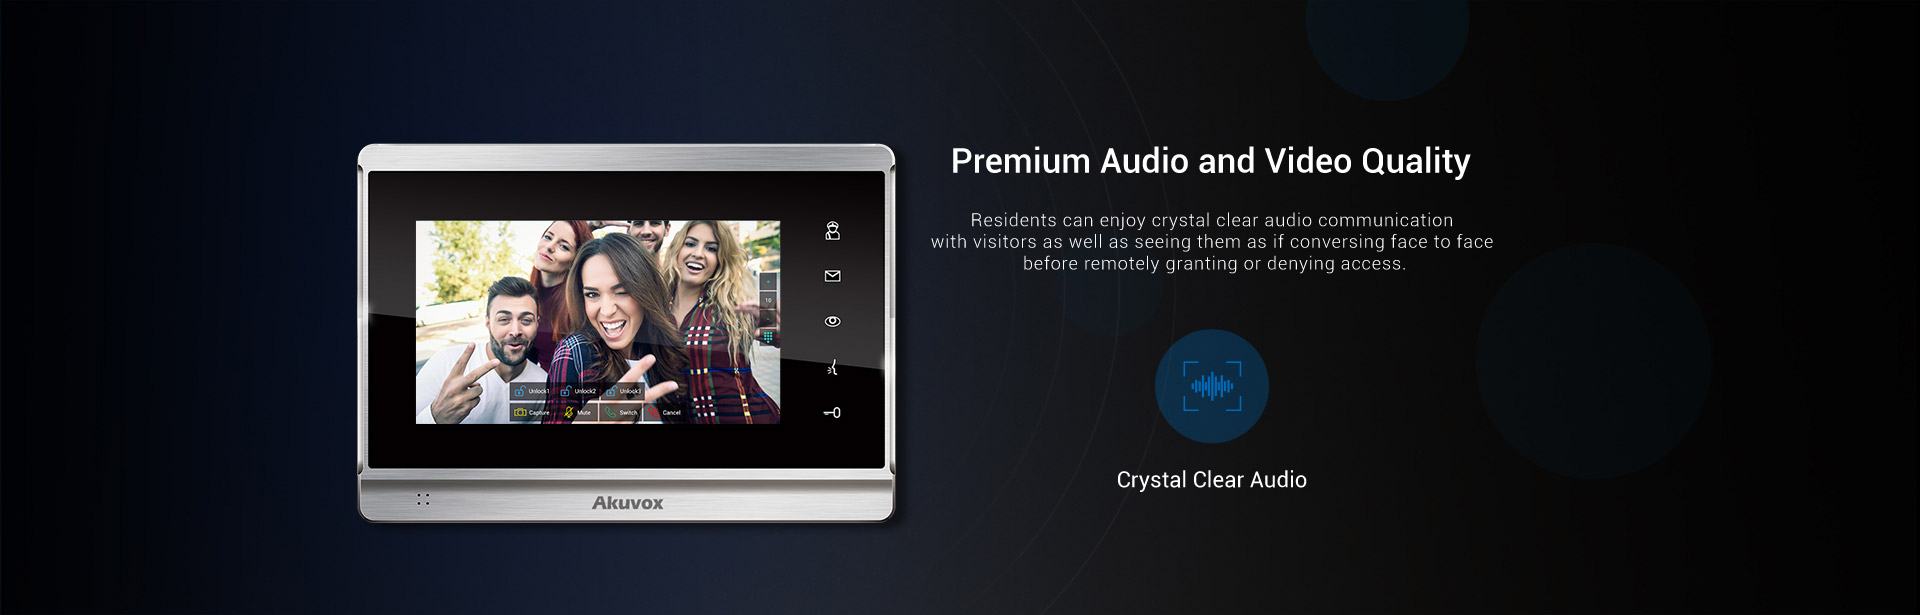 Akuvox IT82R / IT82W Premium Audio and Video Quality